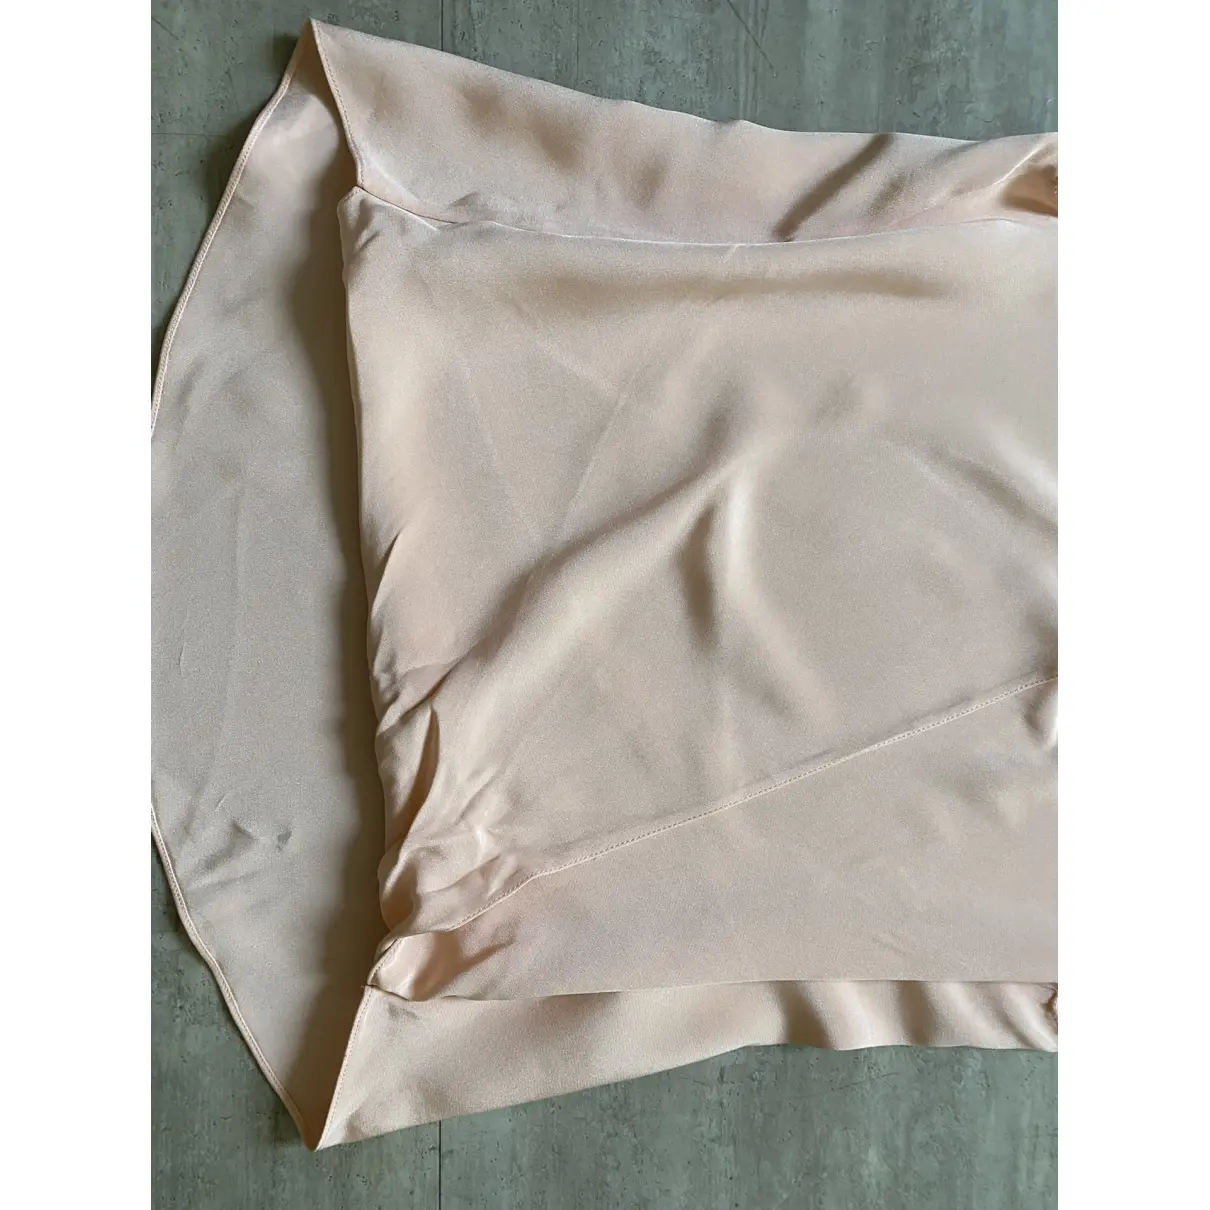 Buy 3.1 Phillip Lim Silk blouse online